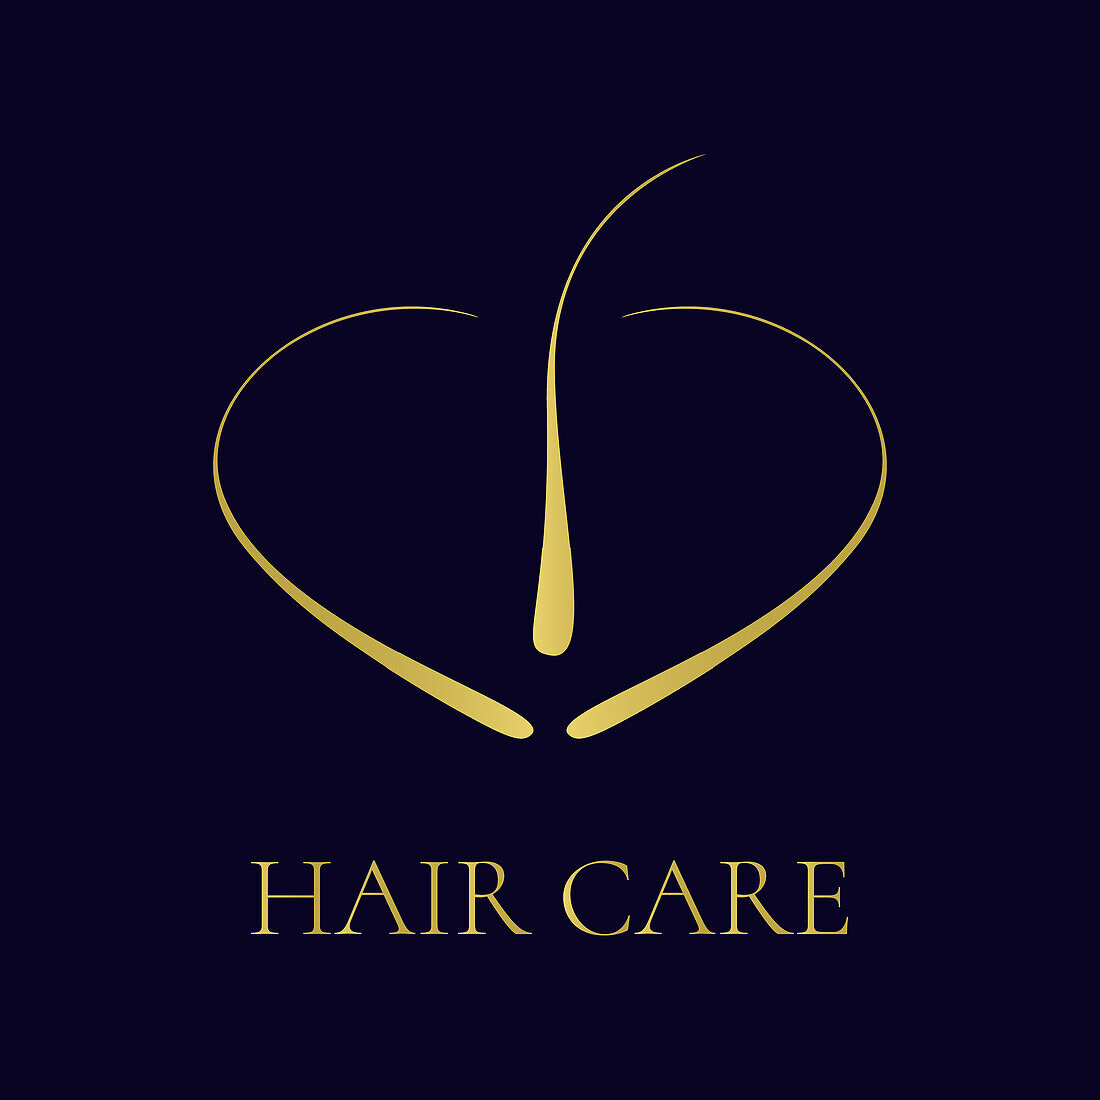 Haire care, conceptual illustration